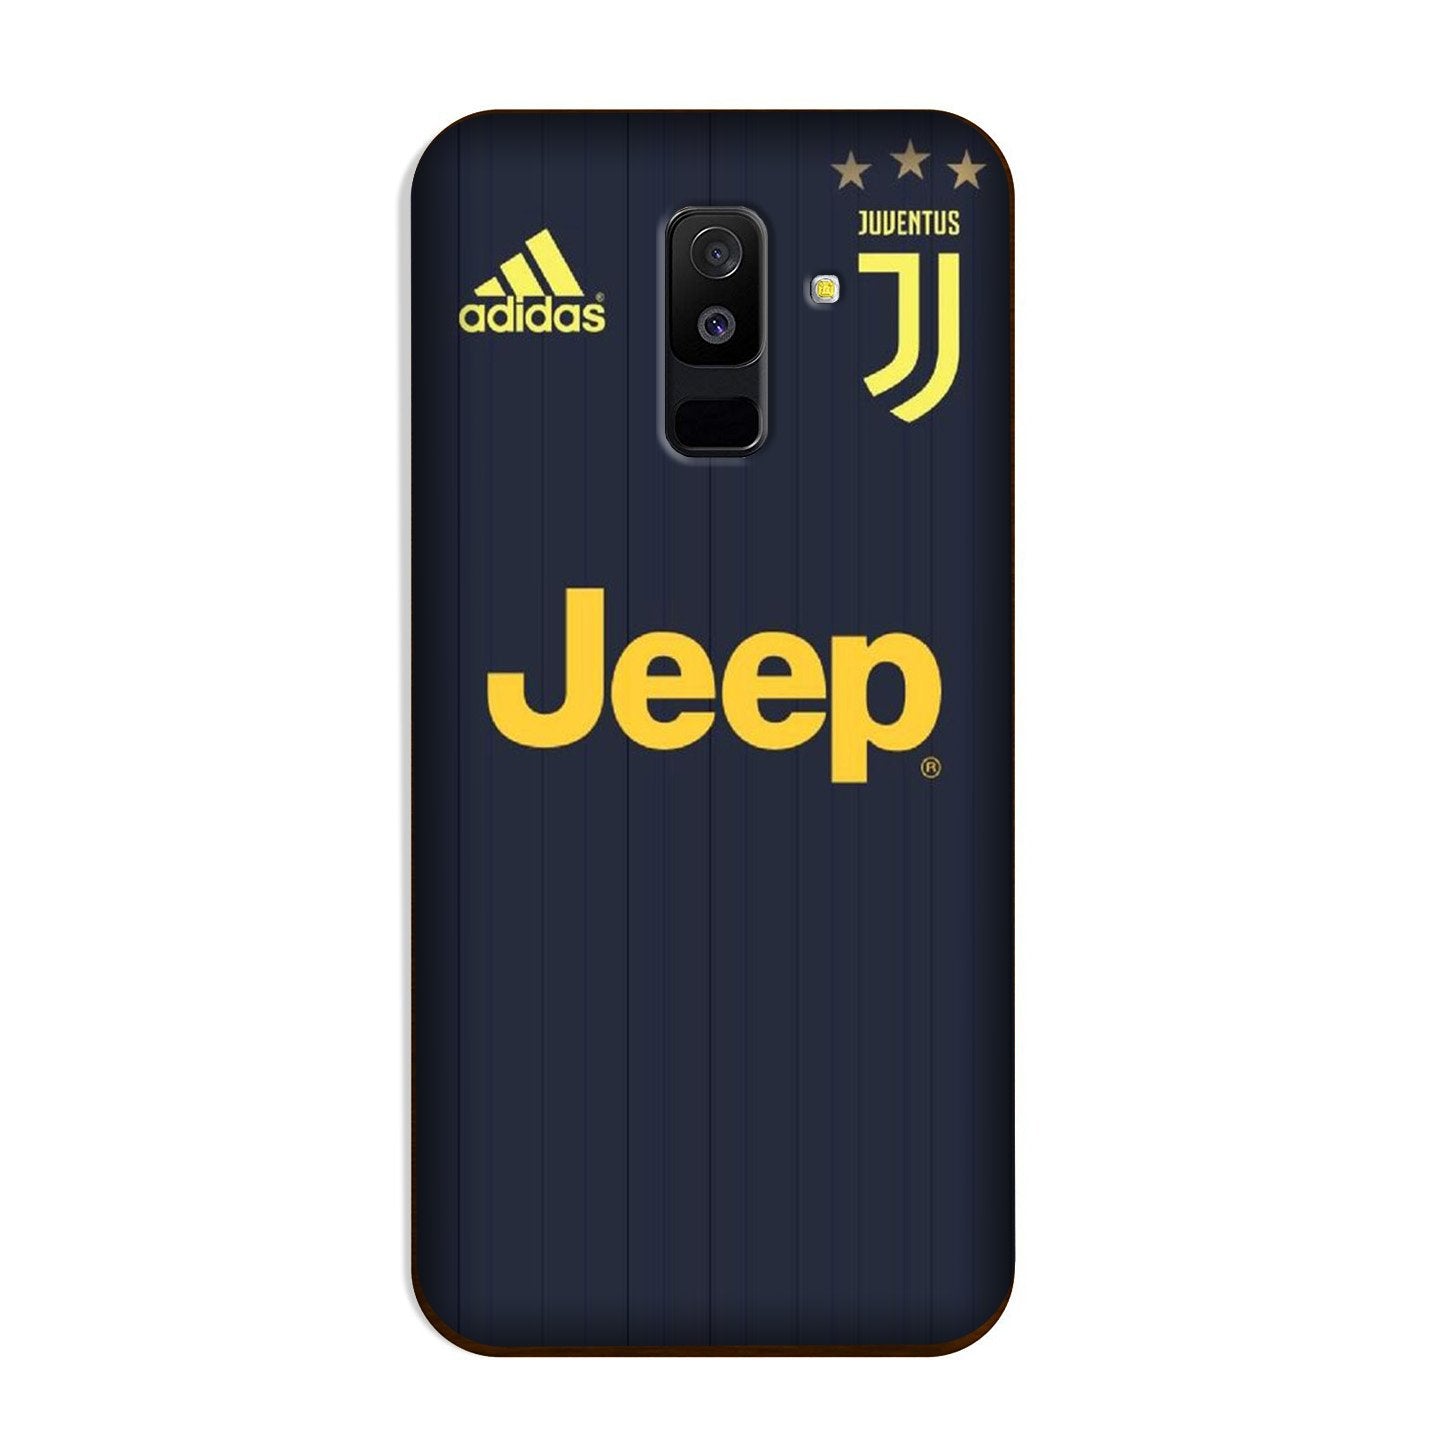 Jeep Juventus Case for Galaxy J8(Design - 161)